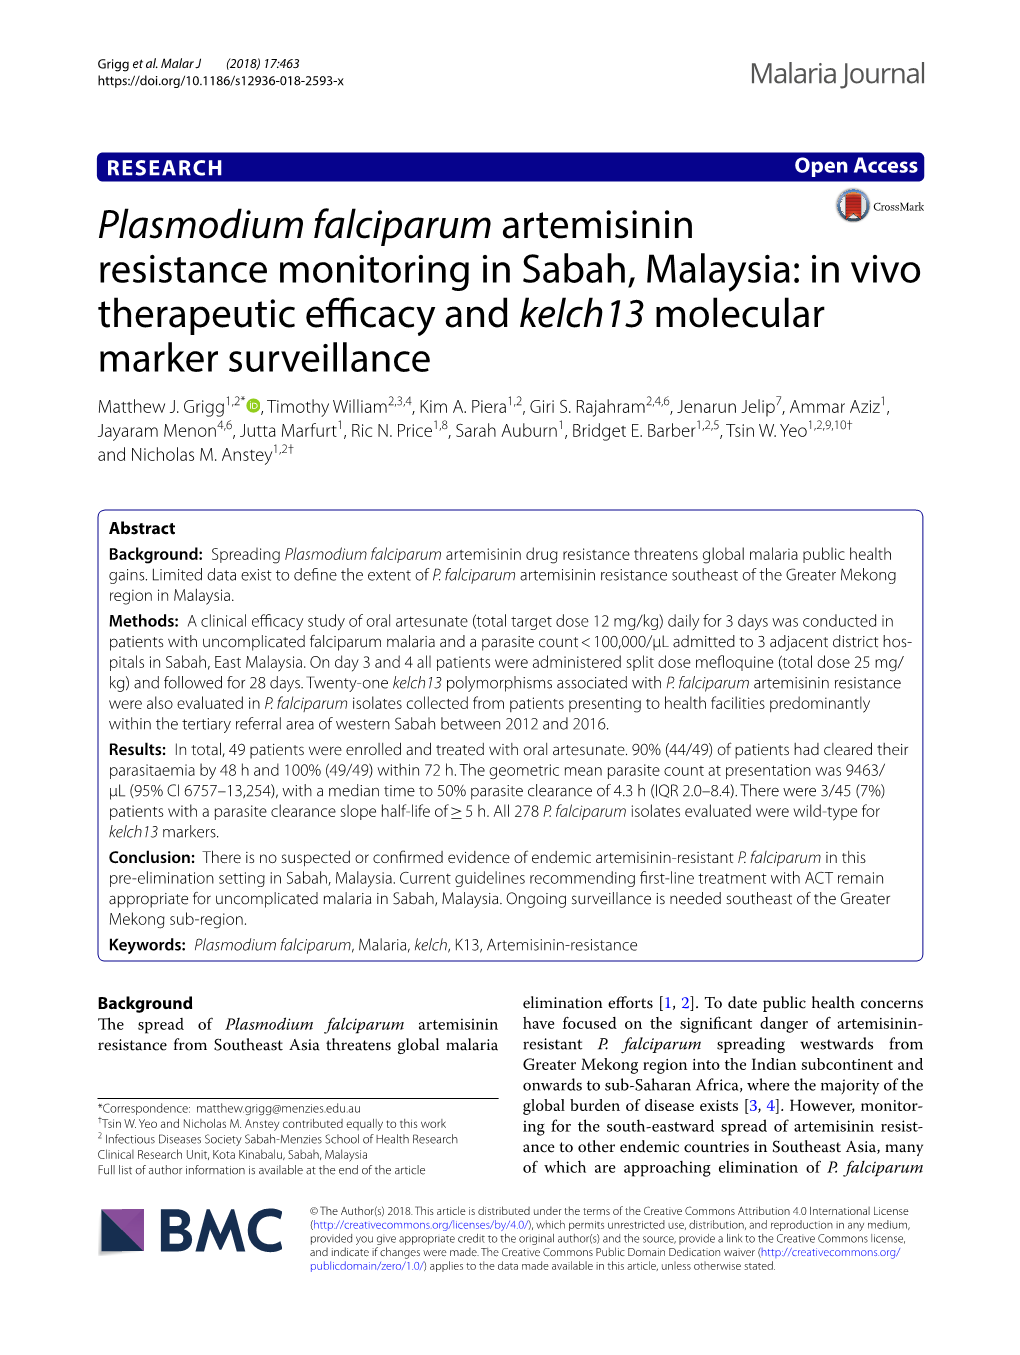 Plasmodium Falciparum Artemisinin Resistance Monitoring in Sabah, Malaysia: in Vivo Therapeutic Efcacy and Kelch13 Molecular Marker Surveillance Matthew J